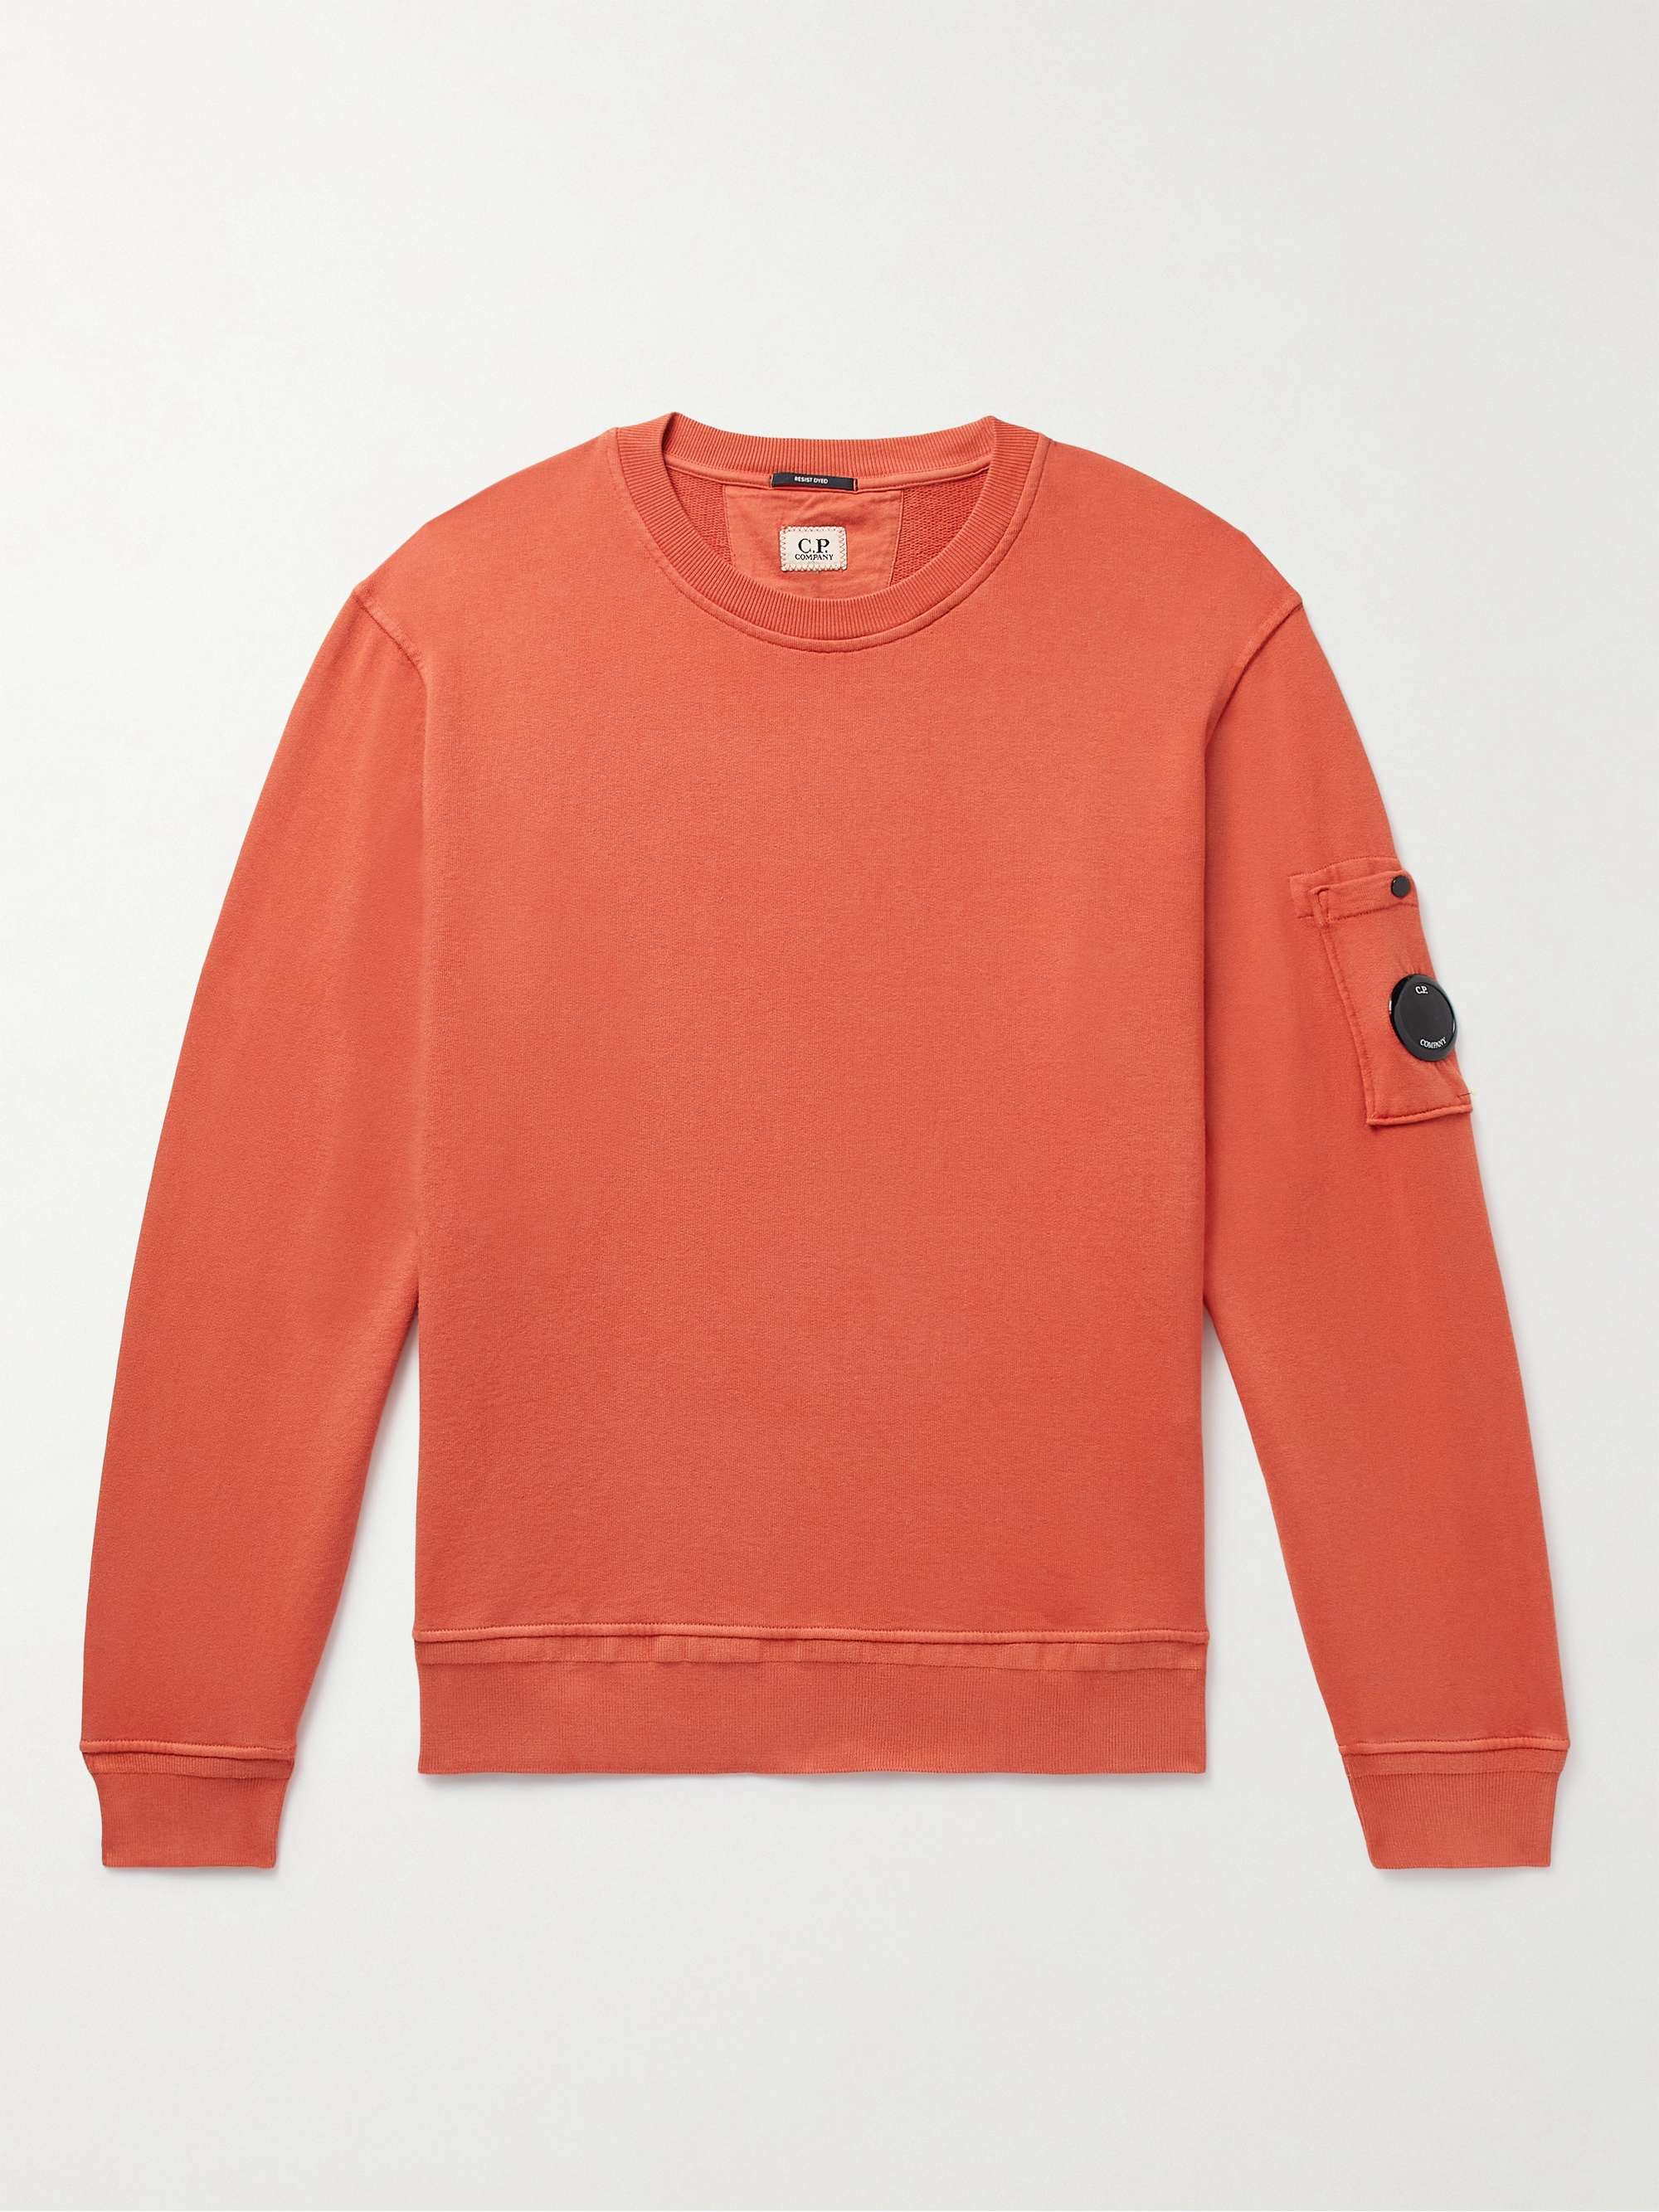 C.P. COMPANY Logo-Appliquéd Cotton-Jersey Sweatshirt